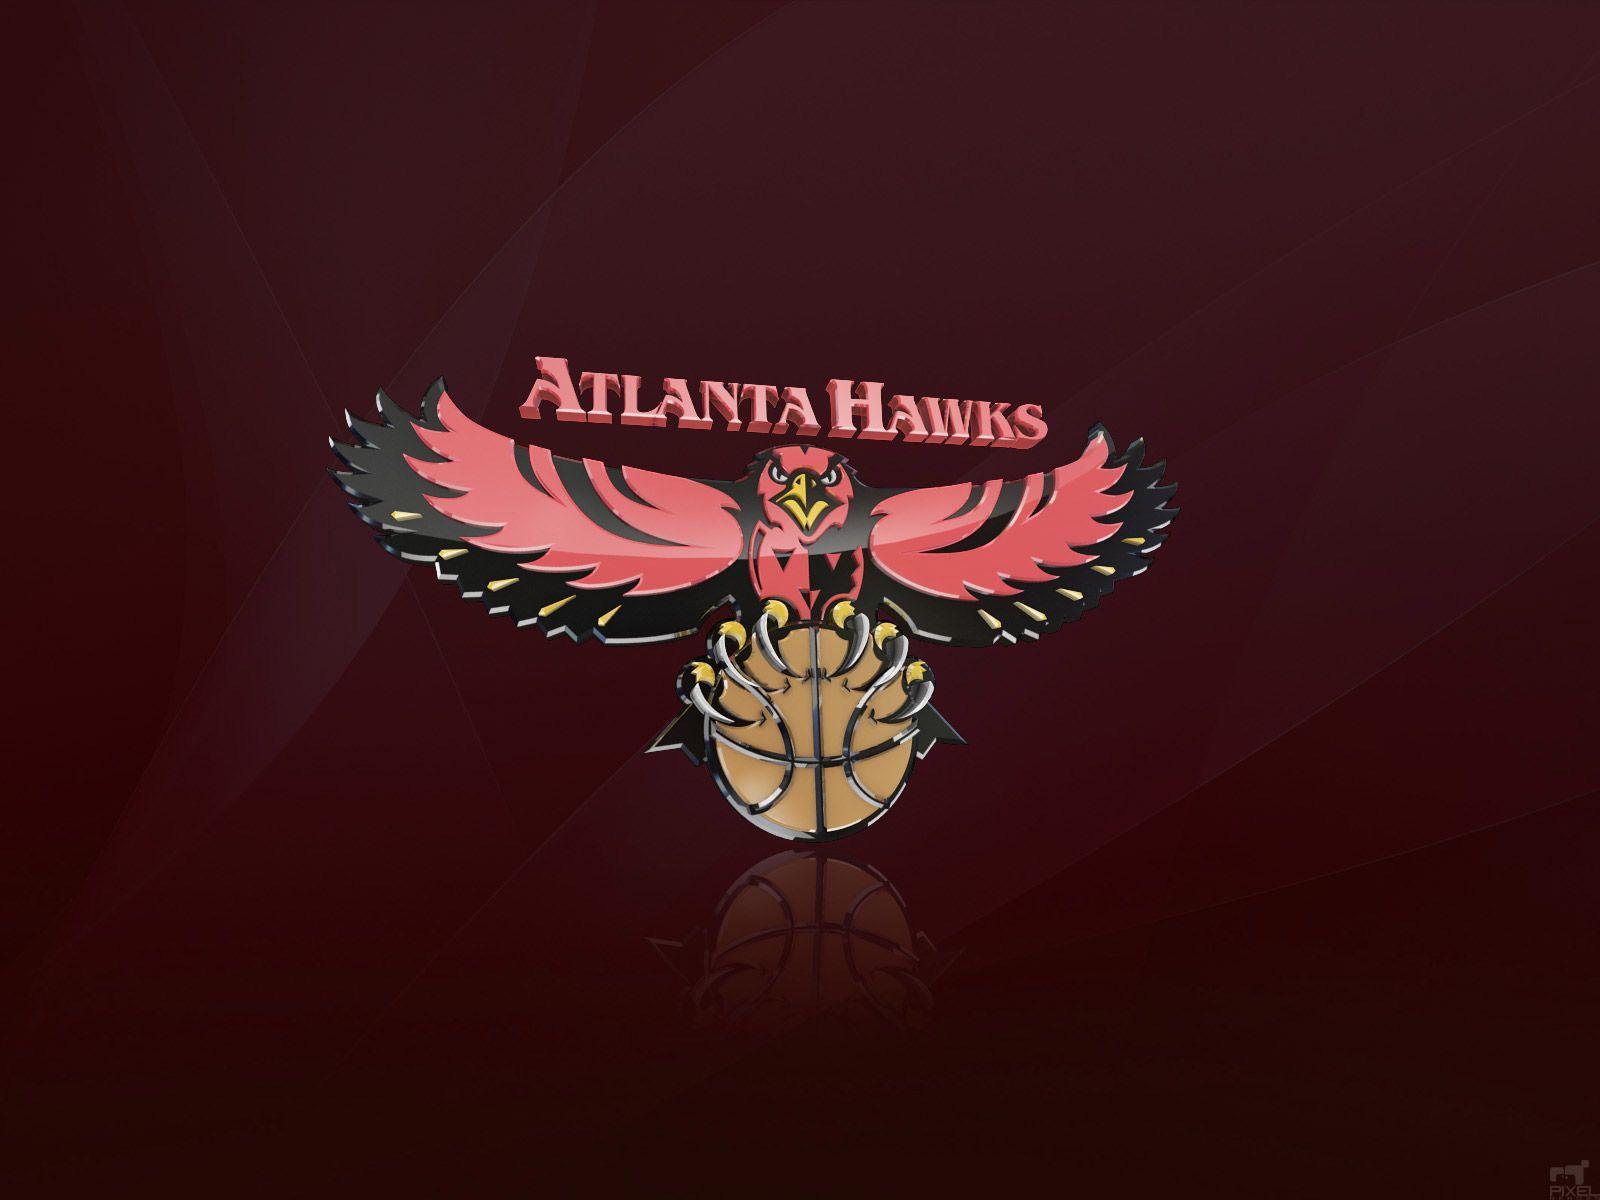 Atlanta Hawks 3D Logo Wallpaper. Basketball Wallpaper at